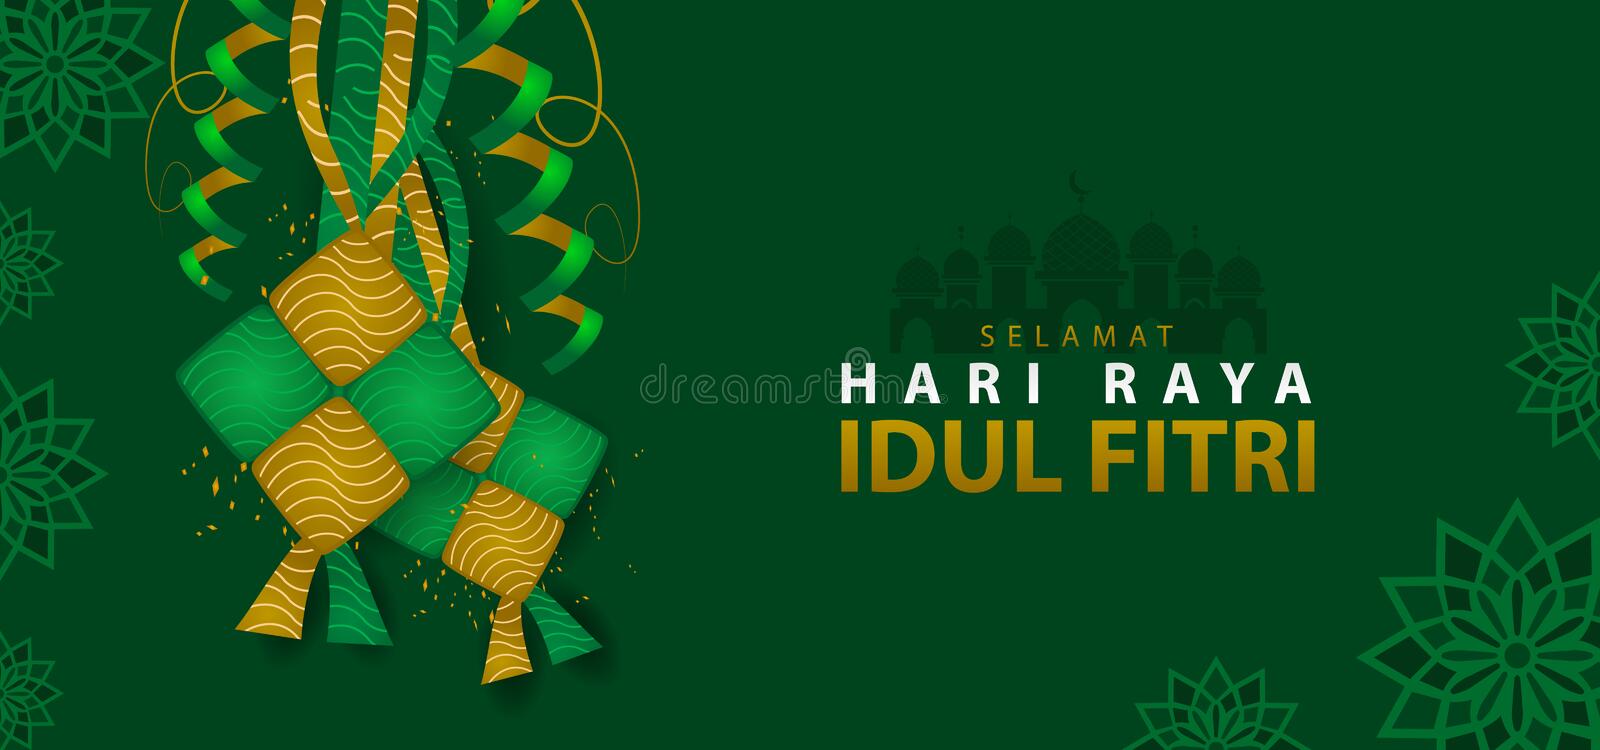 Gambar Background Hari Raya Idul Fitri